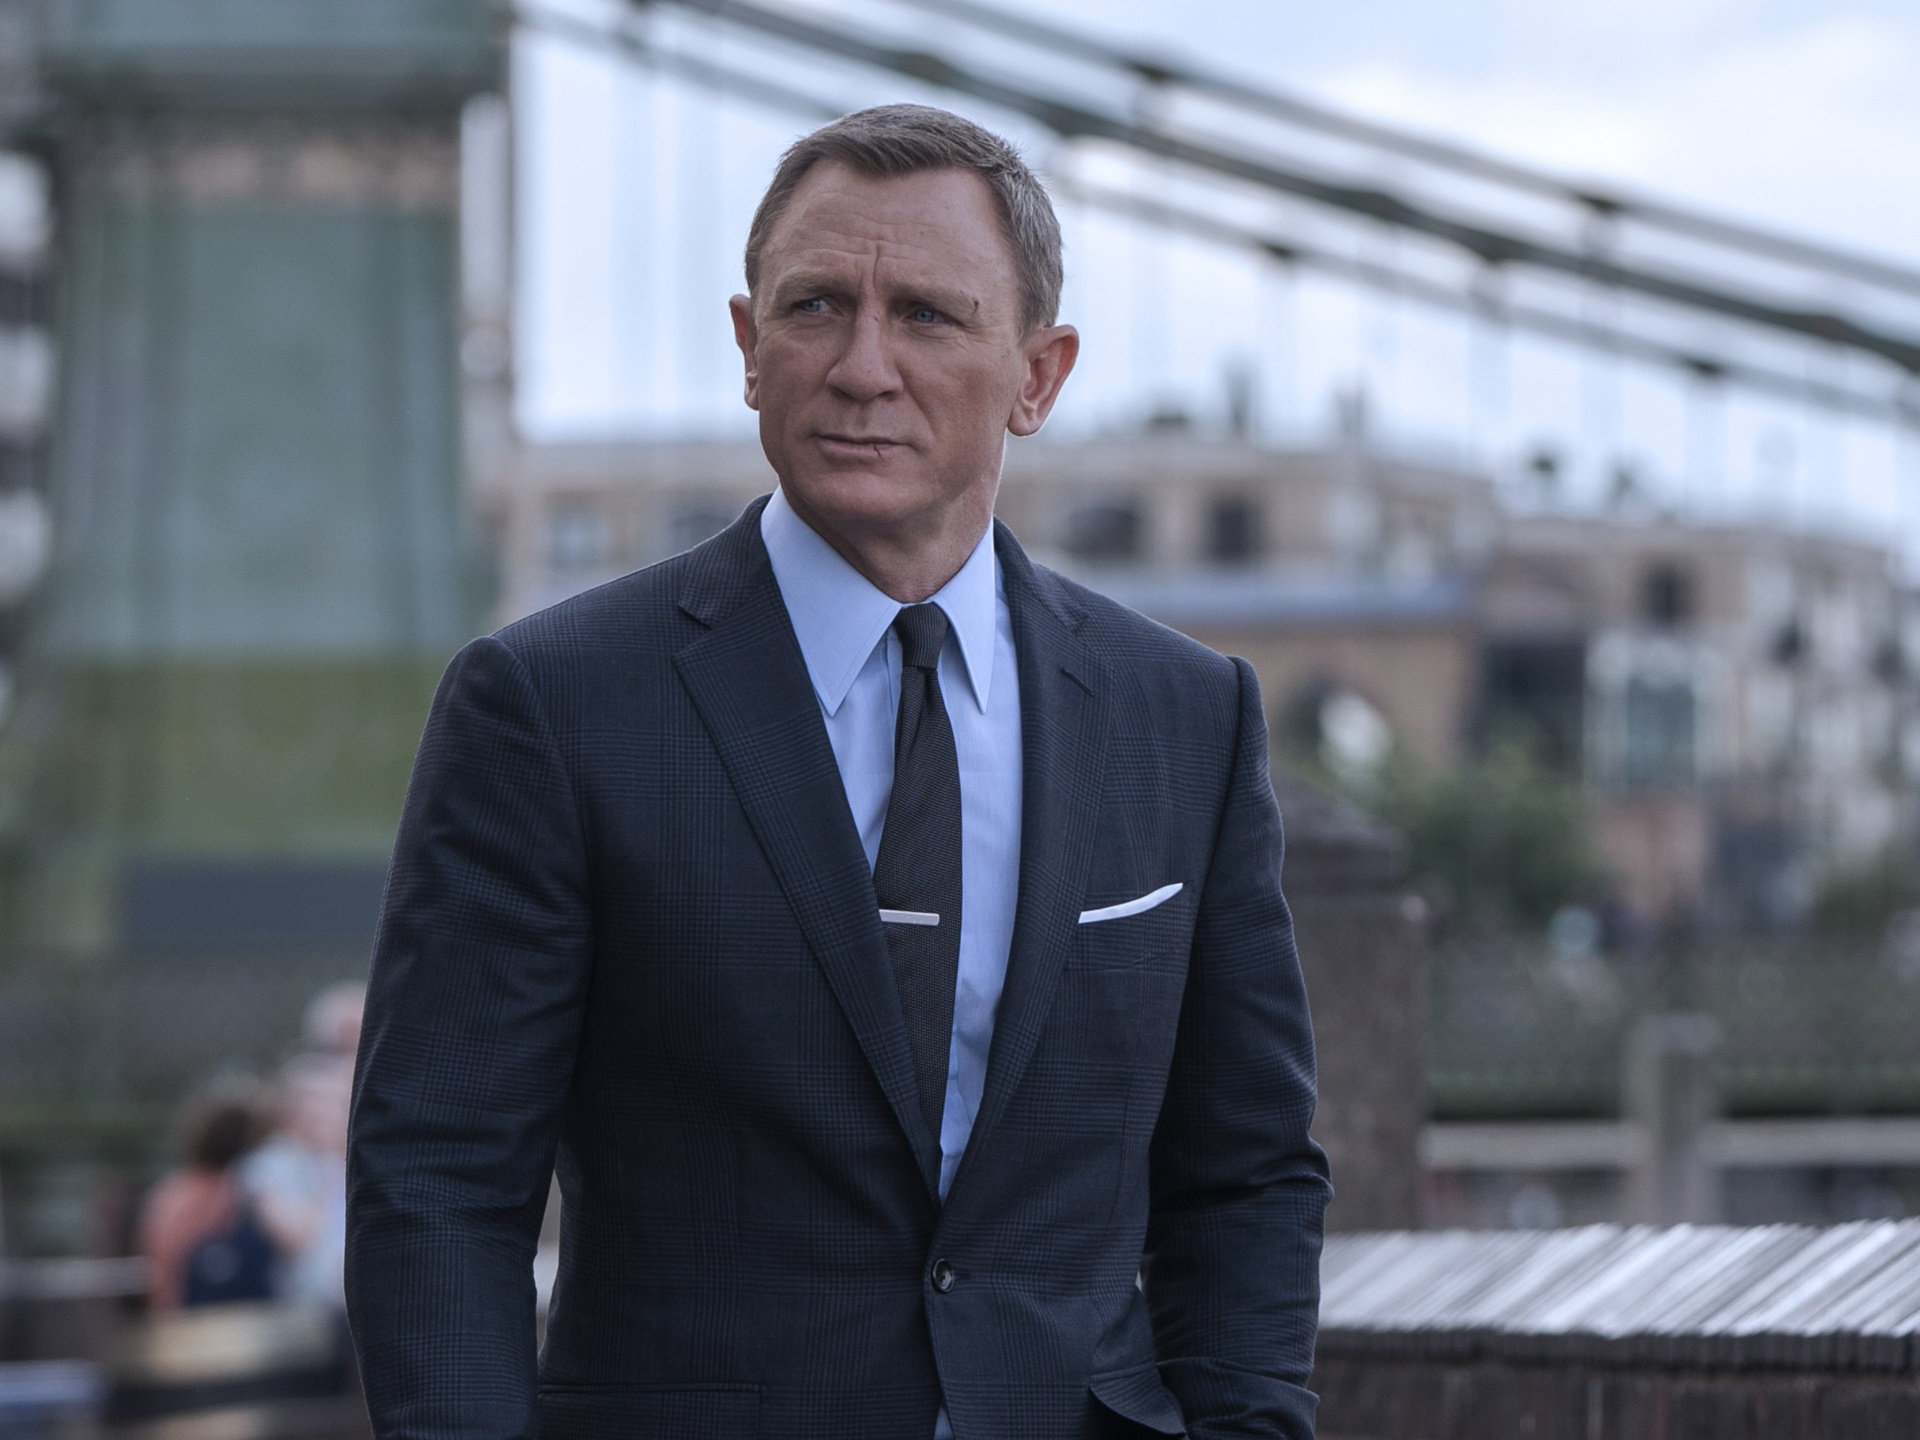 Daniel Craig: Starred in Bond films – Casino Royale, Quantum of Solace, Skyfall, Spectre. 1920x1440 HD Wallpaper.